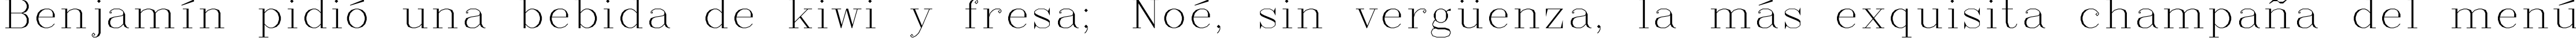 Пример написания шрифтом Complex текста на испанском